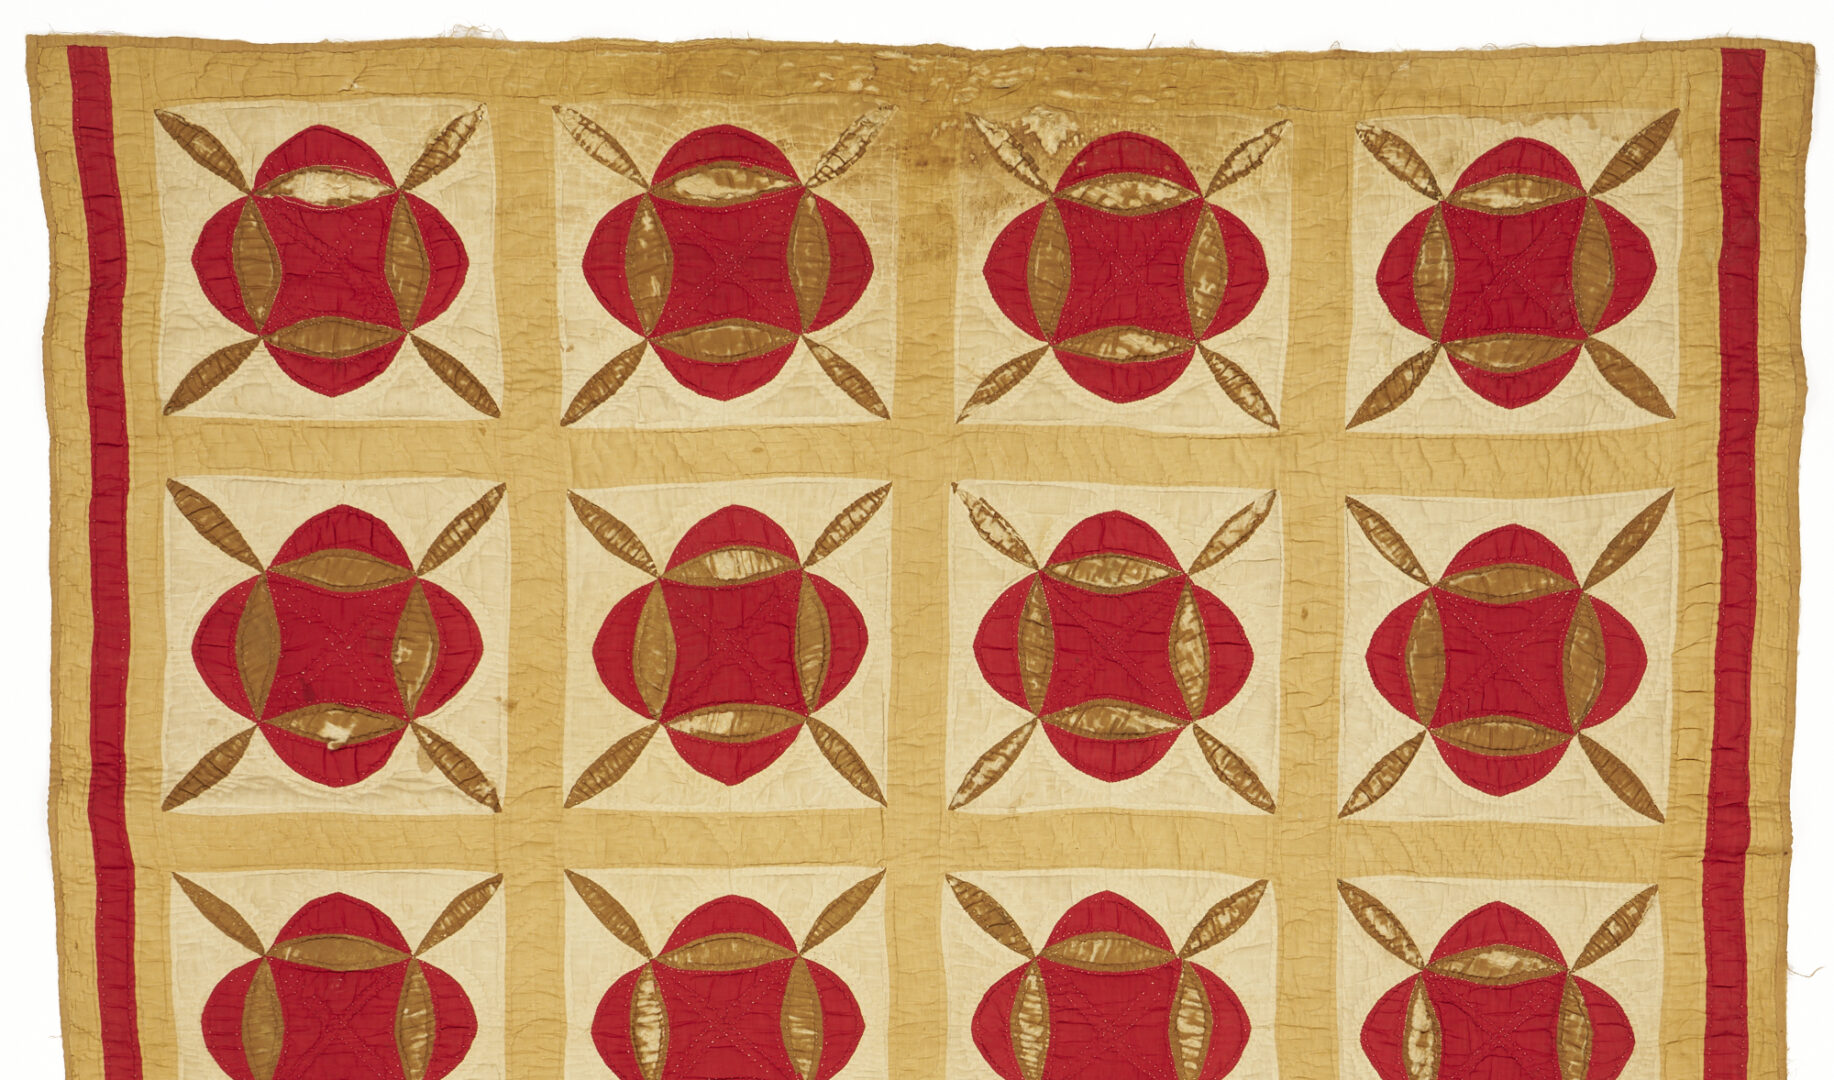 Lot 186: 3 Antique Quilts, incl. Garden of Eden, Hickory Leaf Patterns